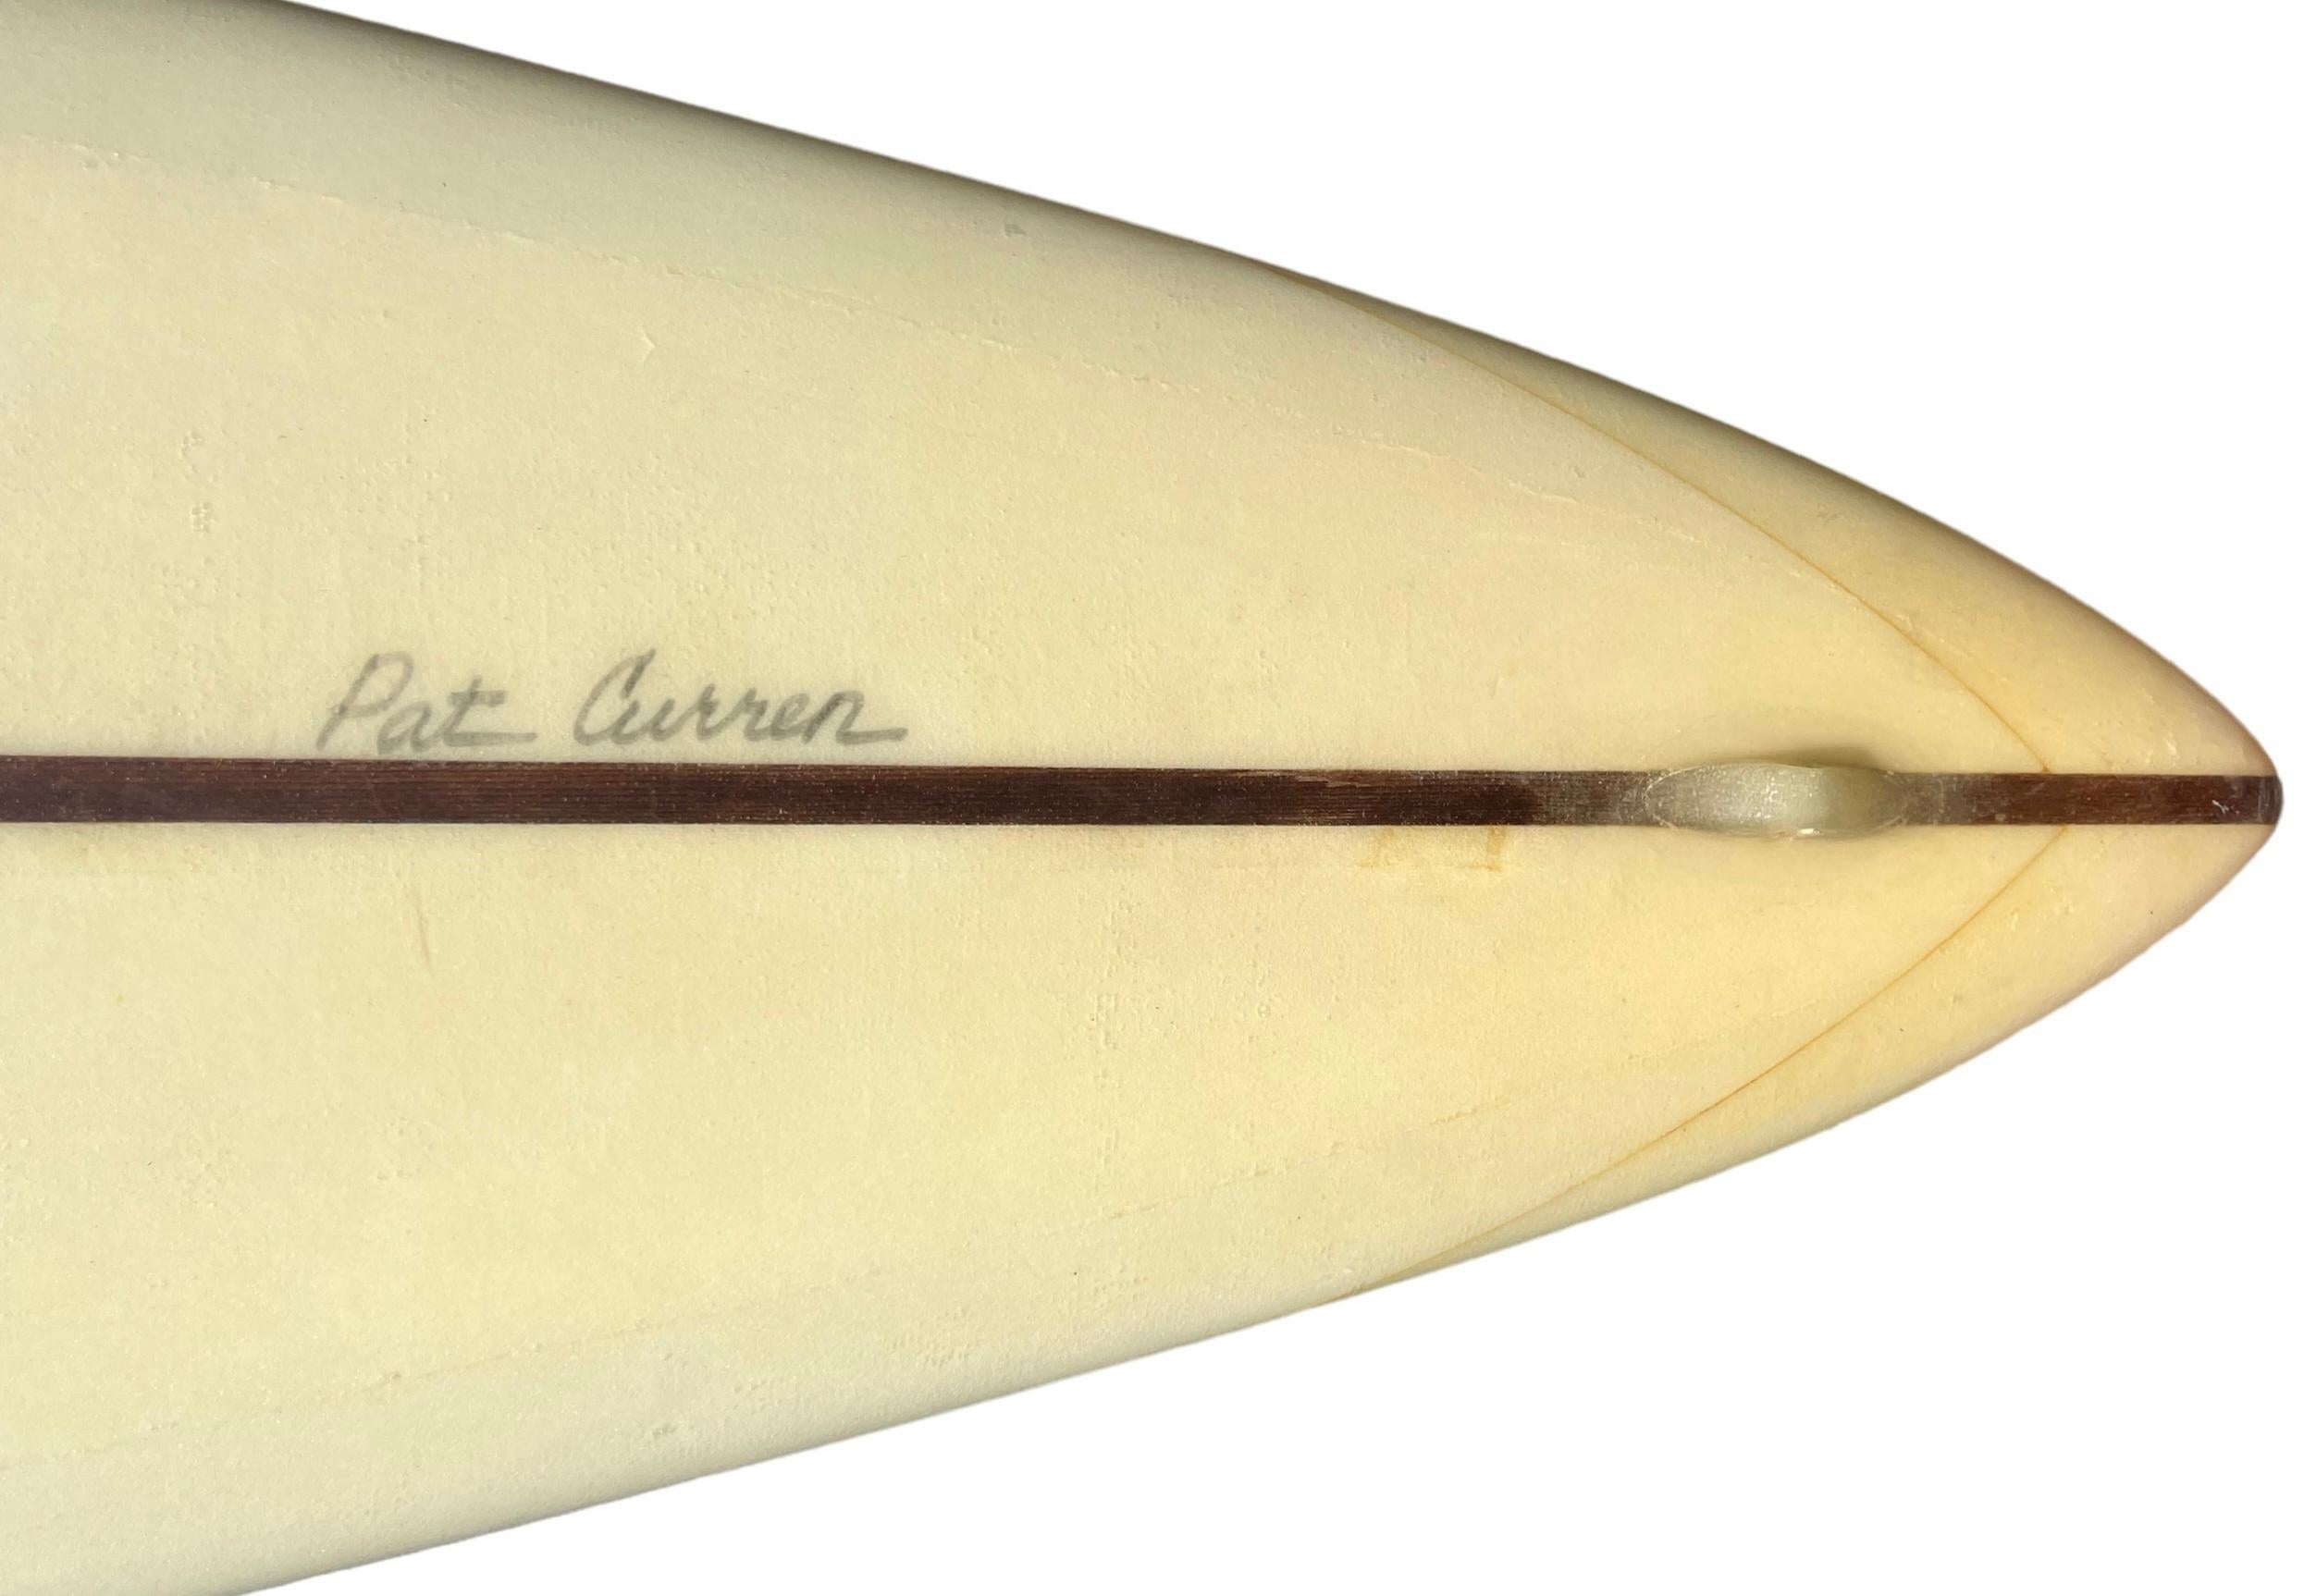 American 1960s Model Pat Curren ‘Elephant Gun’ Big Wave Surfboard For Sale